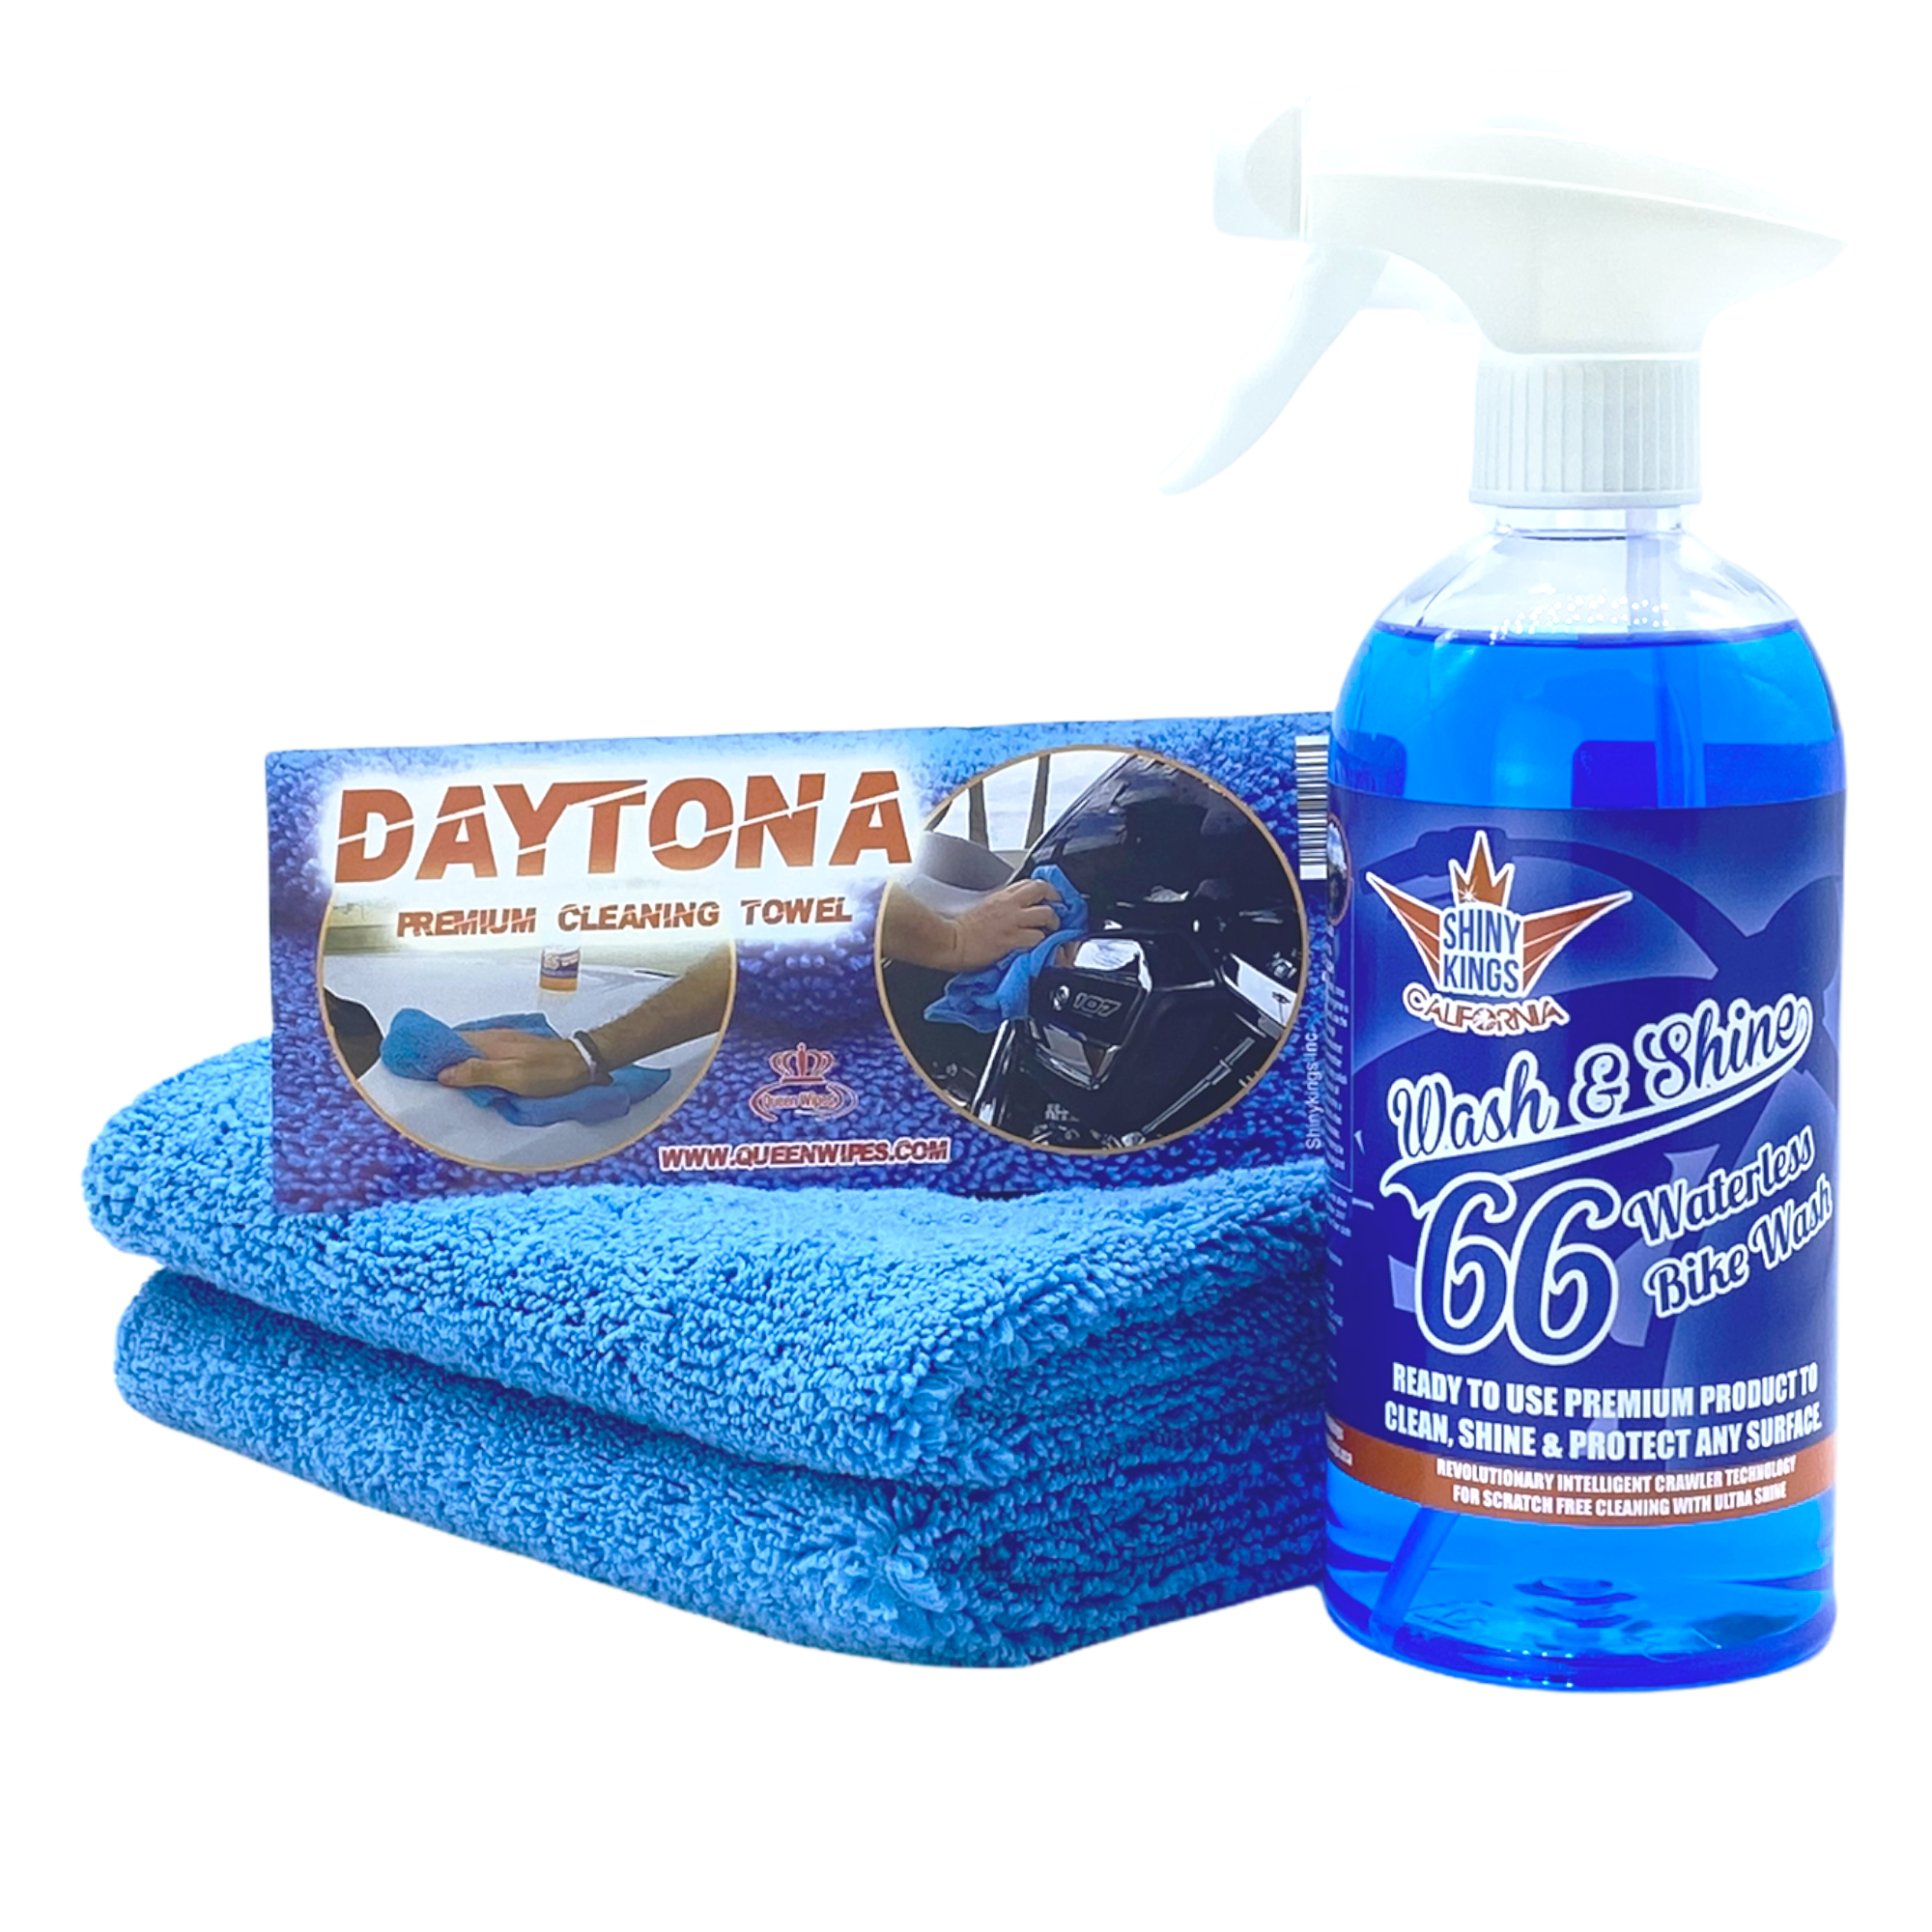 Wash&Shine 66 waterless bike wash motorcycle cleaner including 2 Daytona Premium cleaning cloth